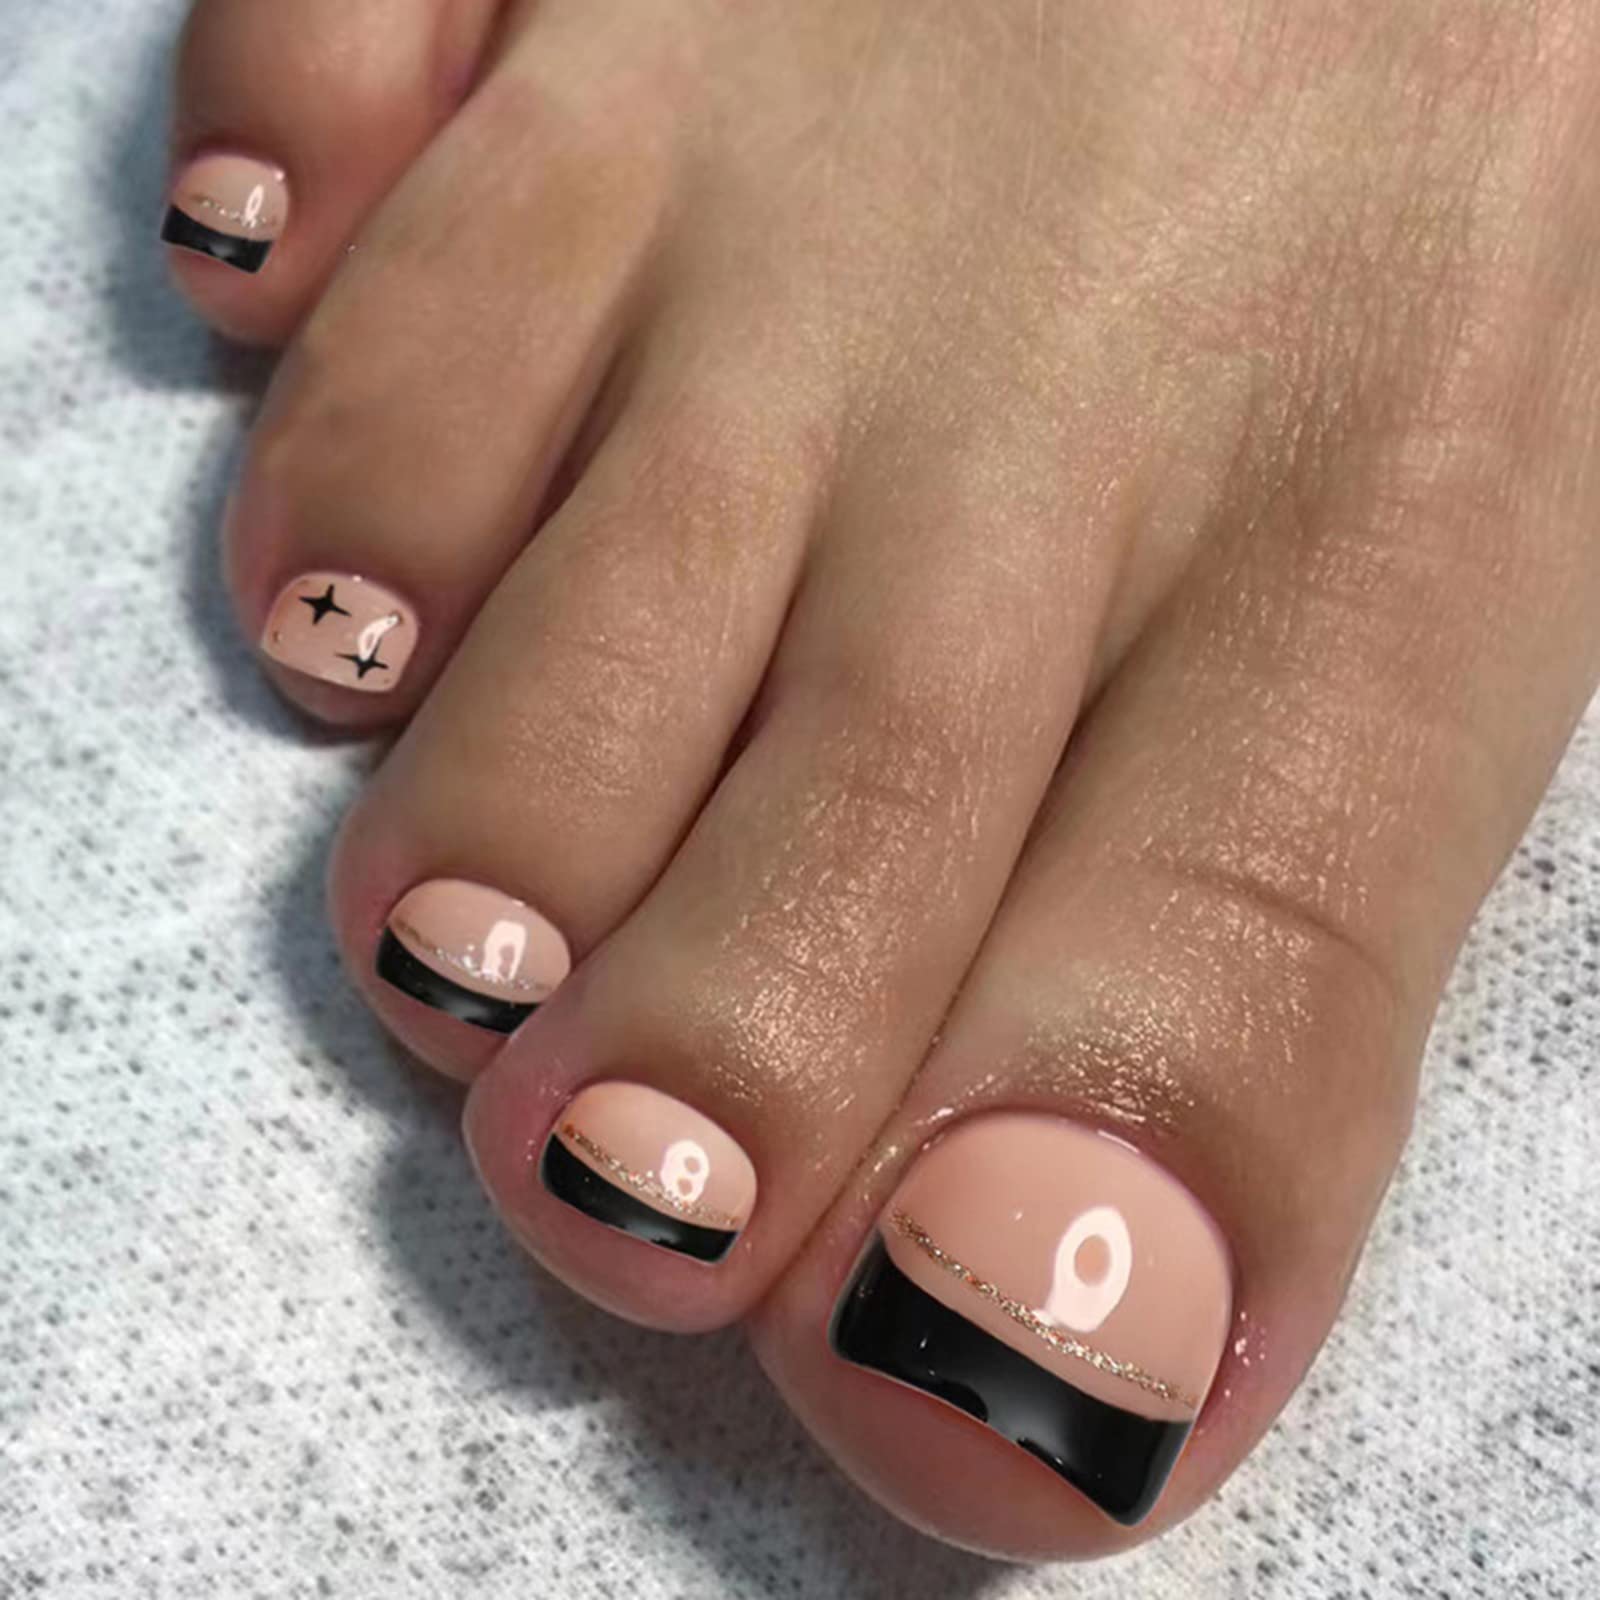 35 Simple And Easy Toe Nail Art Design Ideas You Can Try Out At Home |  Diseños de uñas pies, Arte de uñas de pies, Manicura de uñas